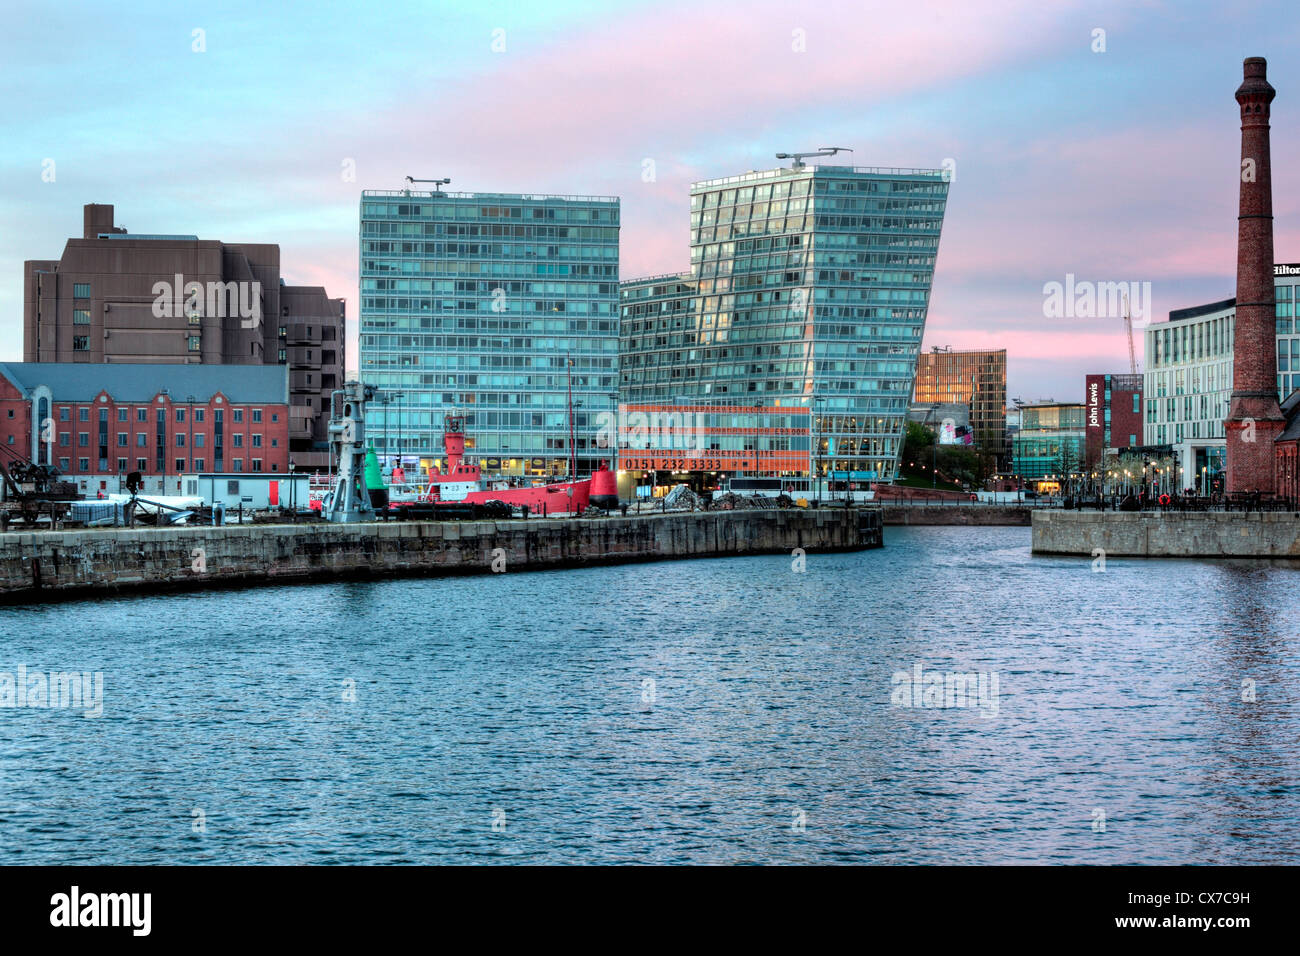 Albert Dock, Liverpool Waterfront, Liverpool, UK Stock Photo